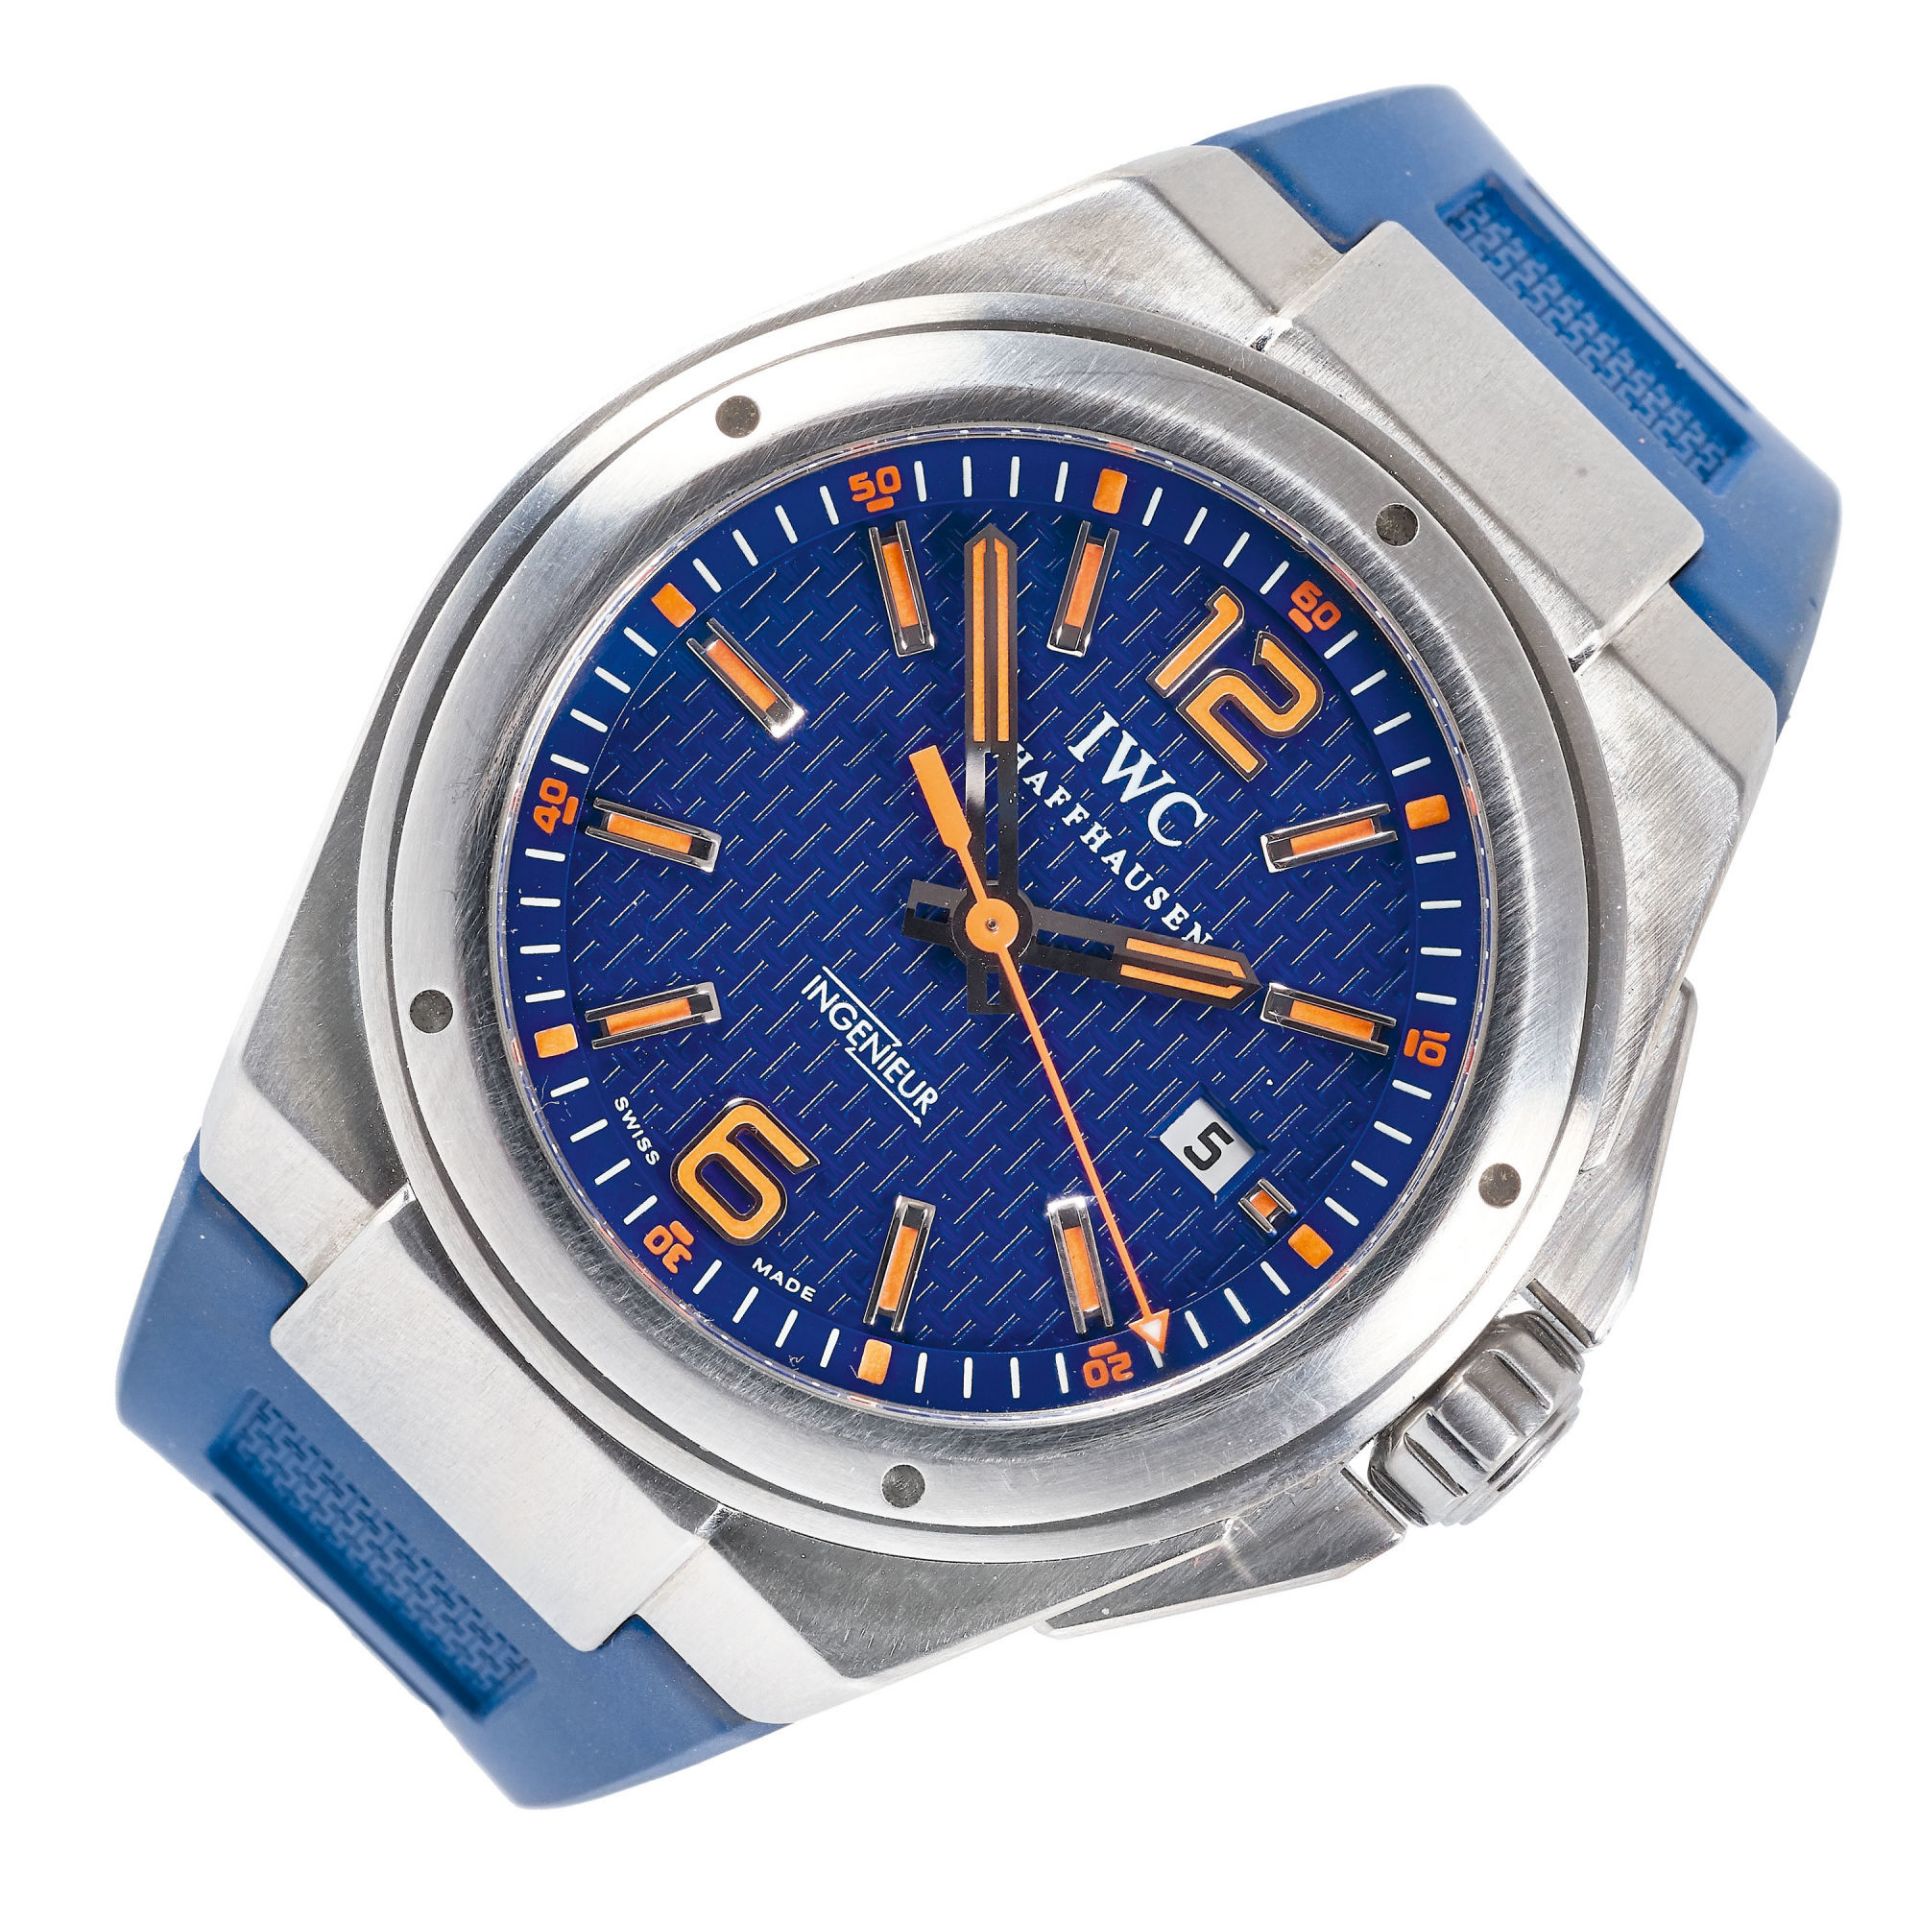 IWC: Herrenarmbanduhr "Ingenieur Plastiki", limitierte Edition. / IWC, Gentleman's wristwatch ...